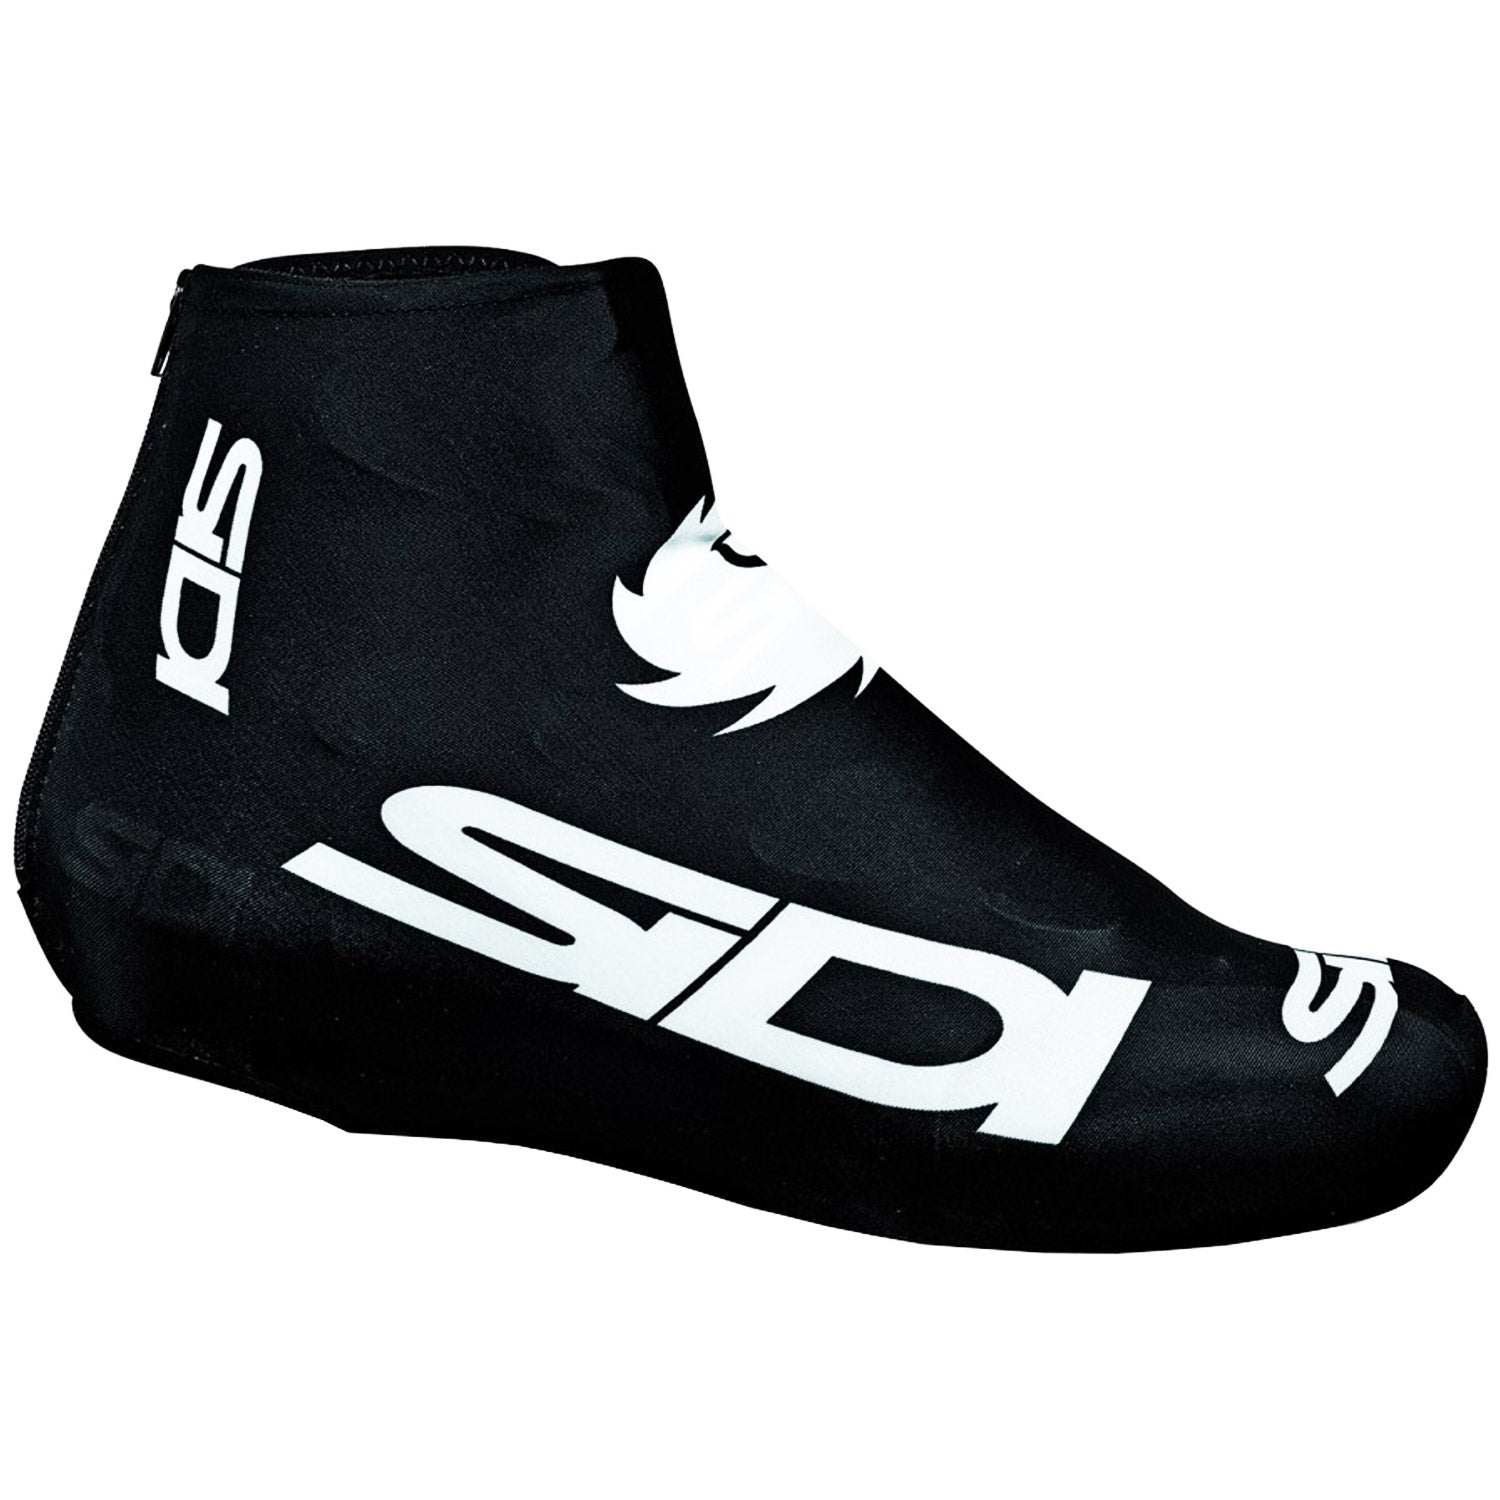 Sidi Chrono Overshoes - Black